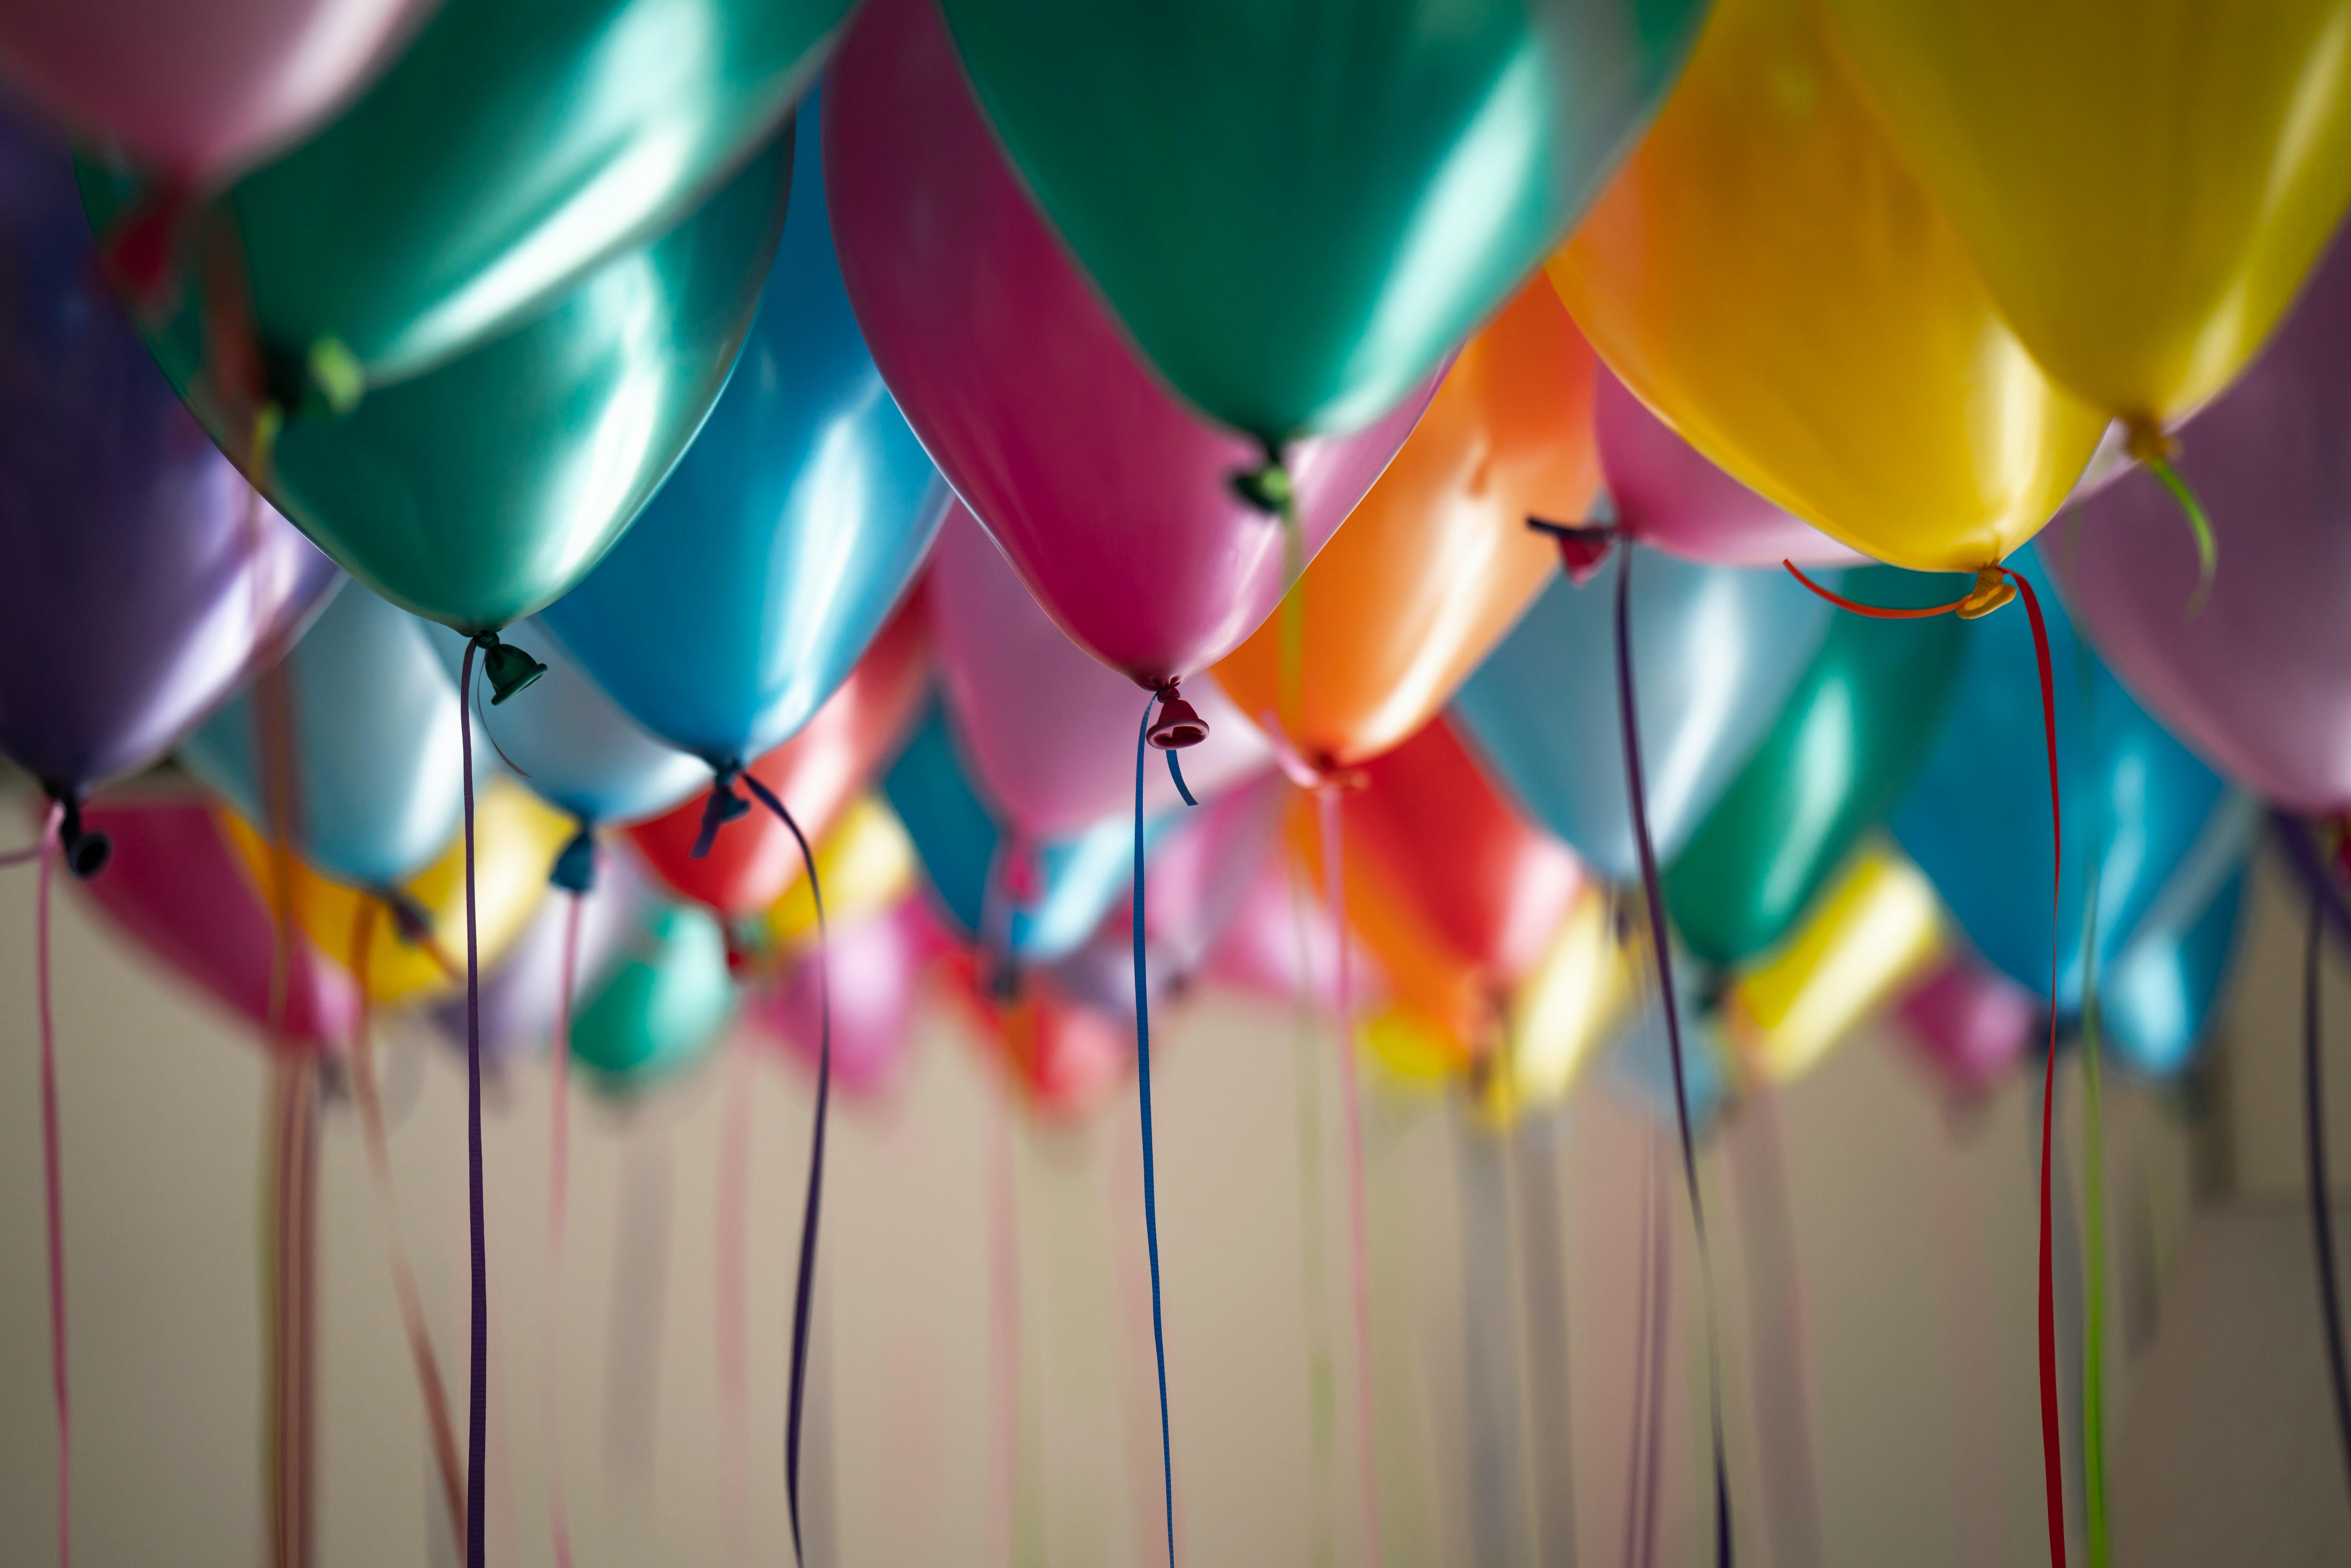 Balloons | Source: Unsplash